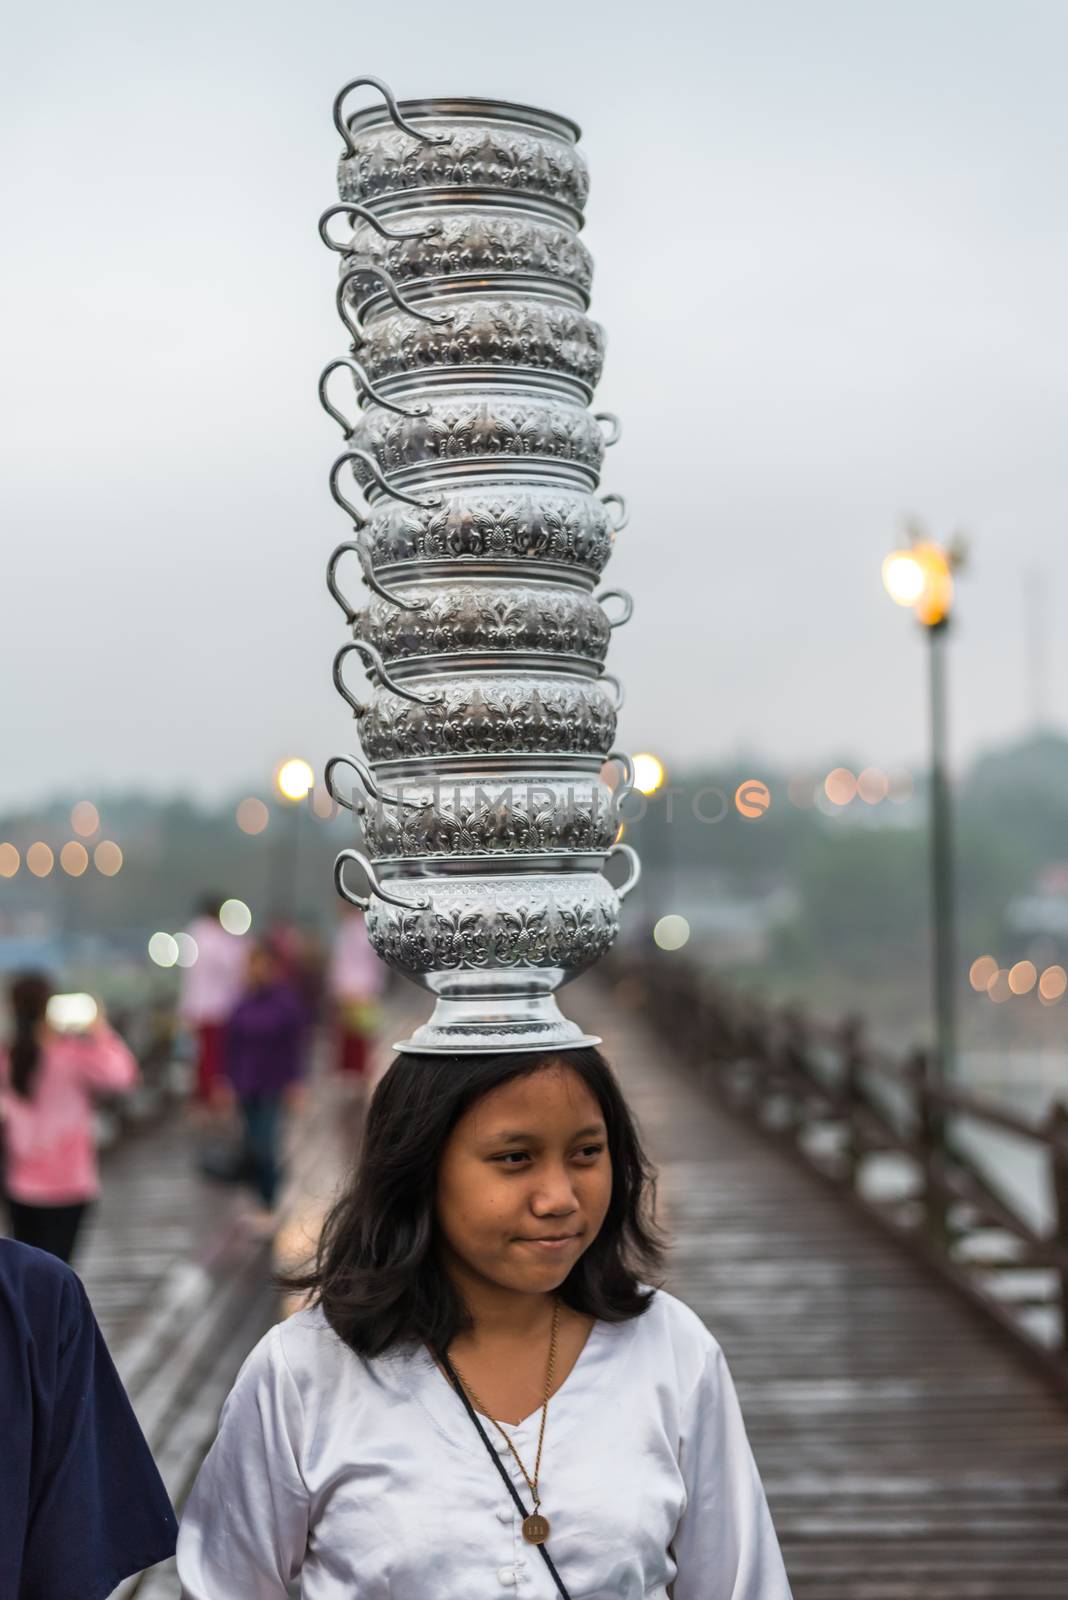 Kanchanaburi, Thailand - March 2, 2018 : Mon woman carry bowl on the head for transport walking on Mon Bridge, Wooden Bridge in Tambon Nong Lu, Amphoe Sangkhla Buri, Chang Wat Kanchanaburi